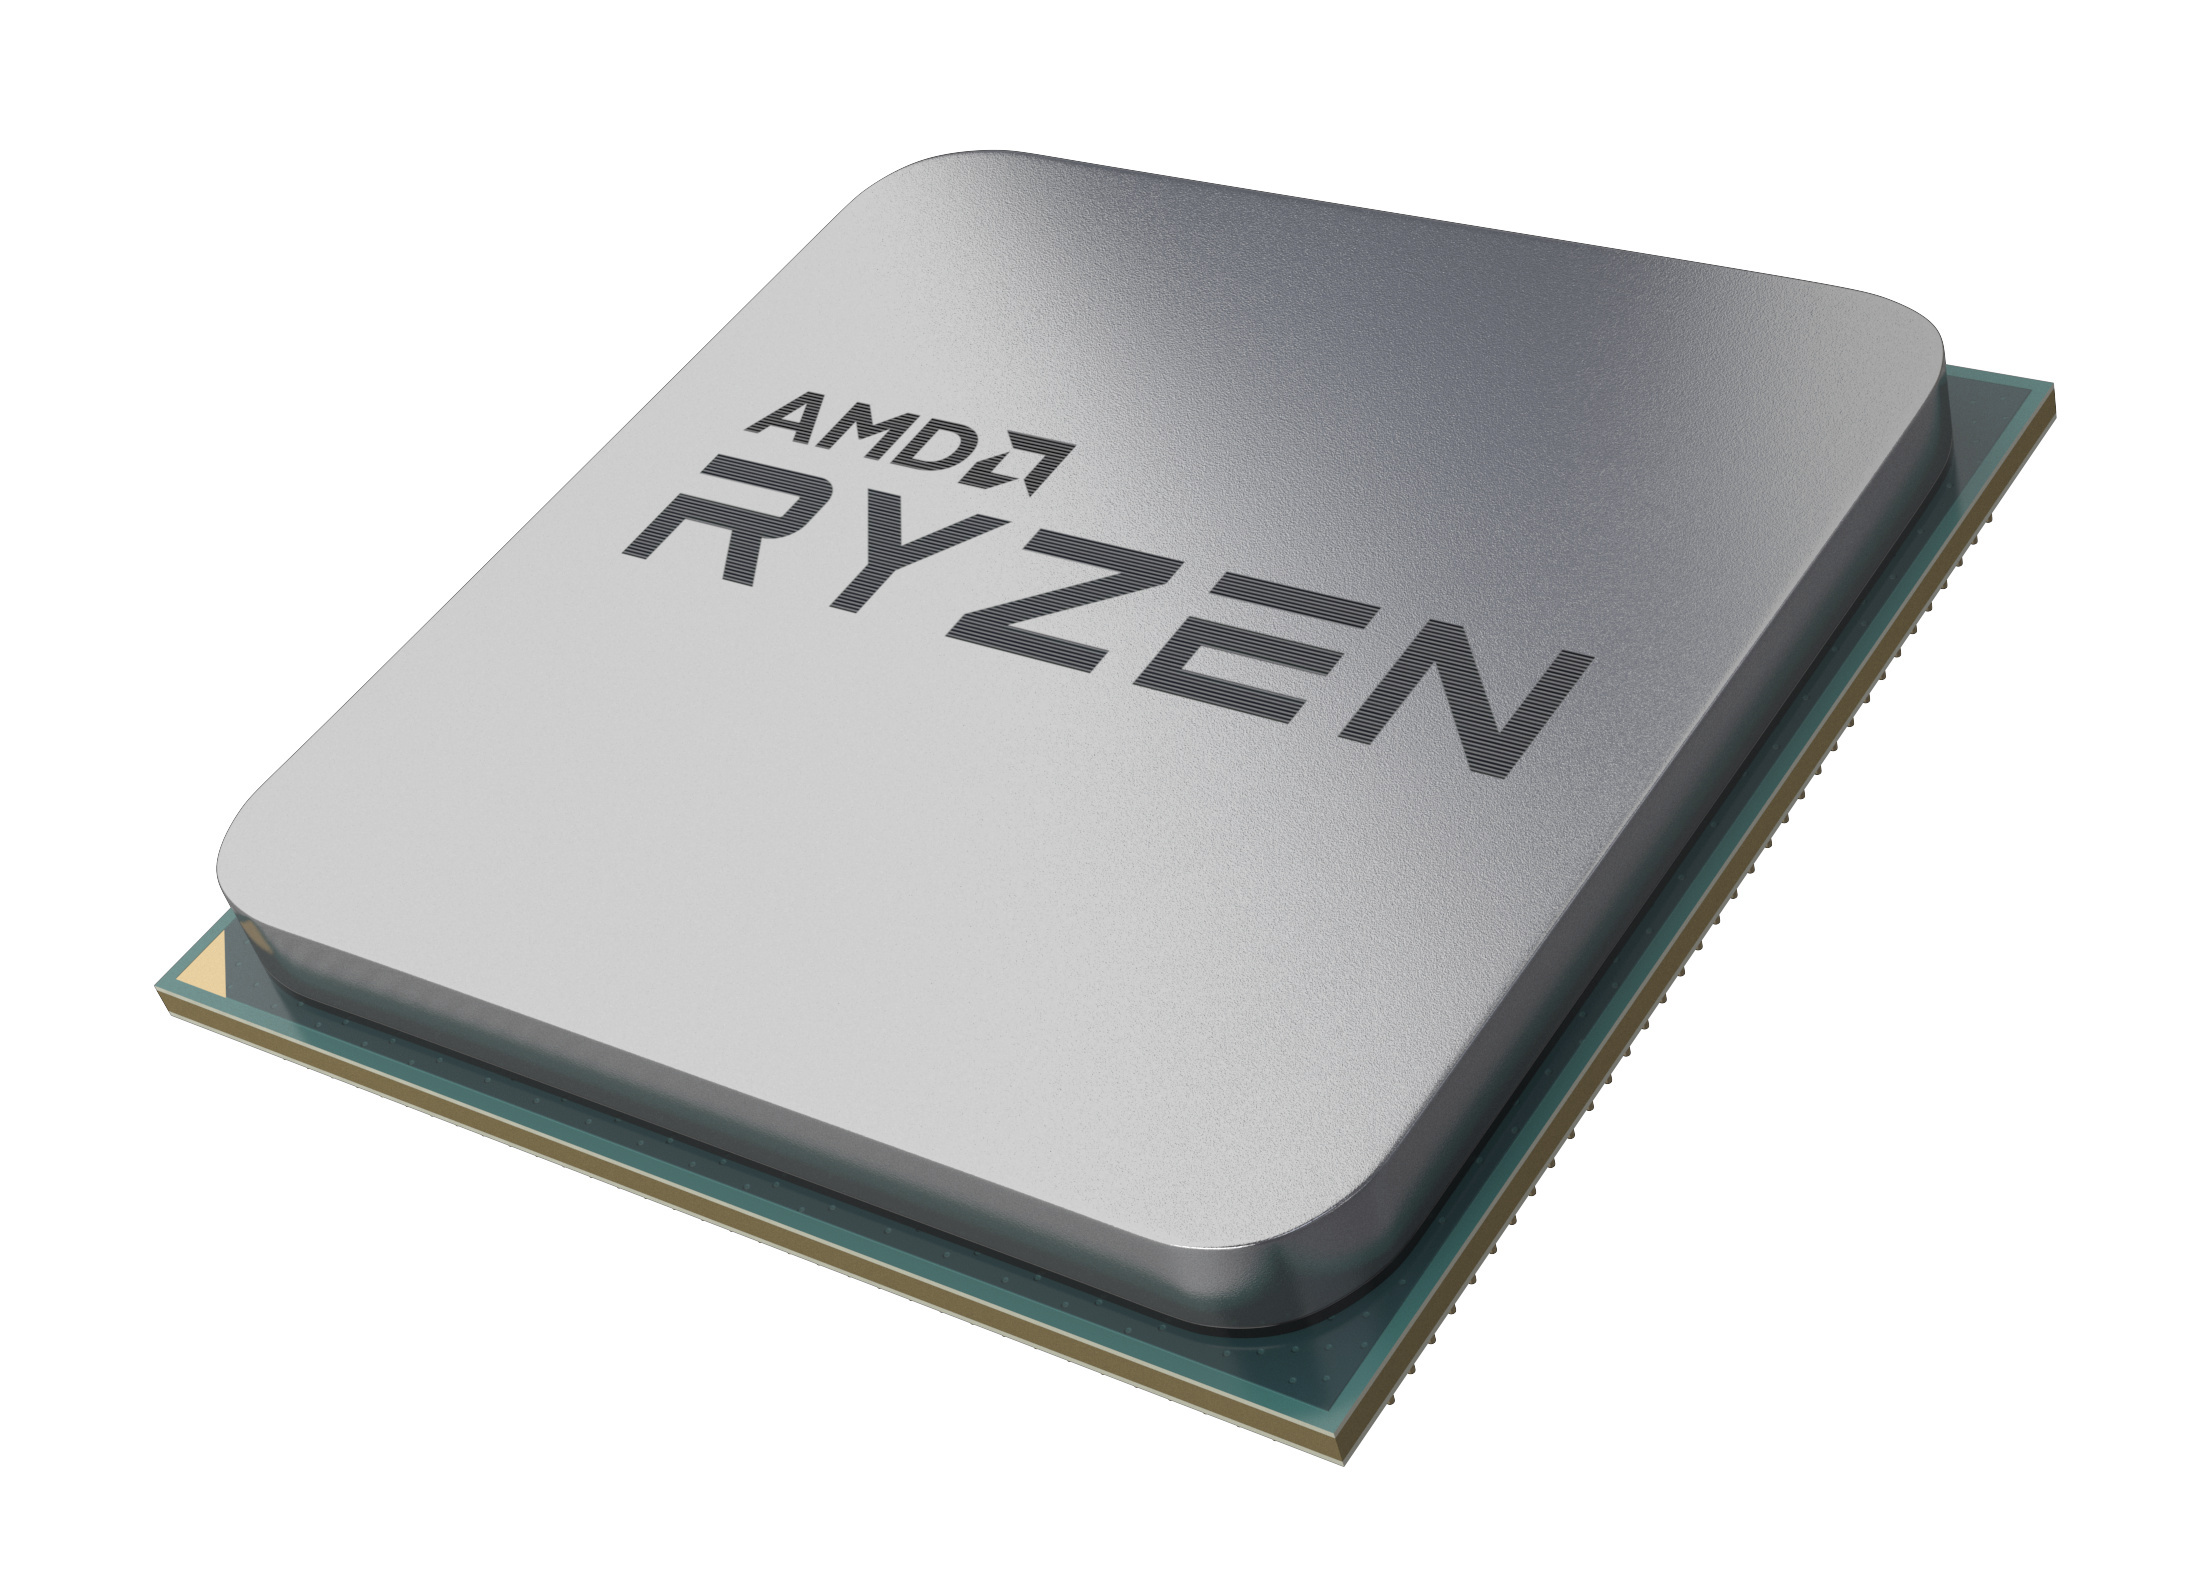  AMD Ryzen 3 3200G OEM